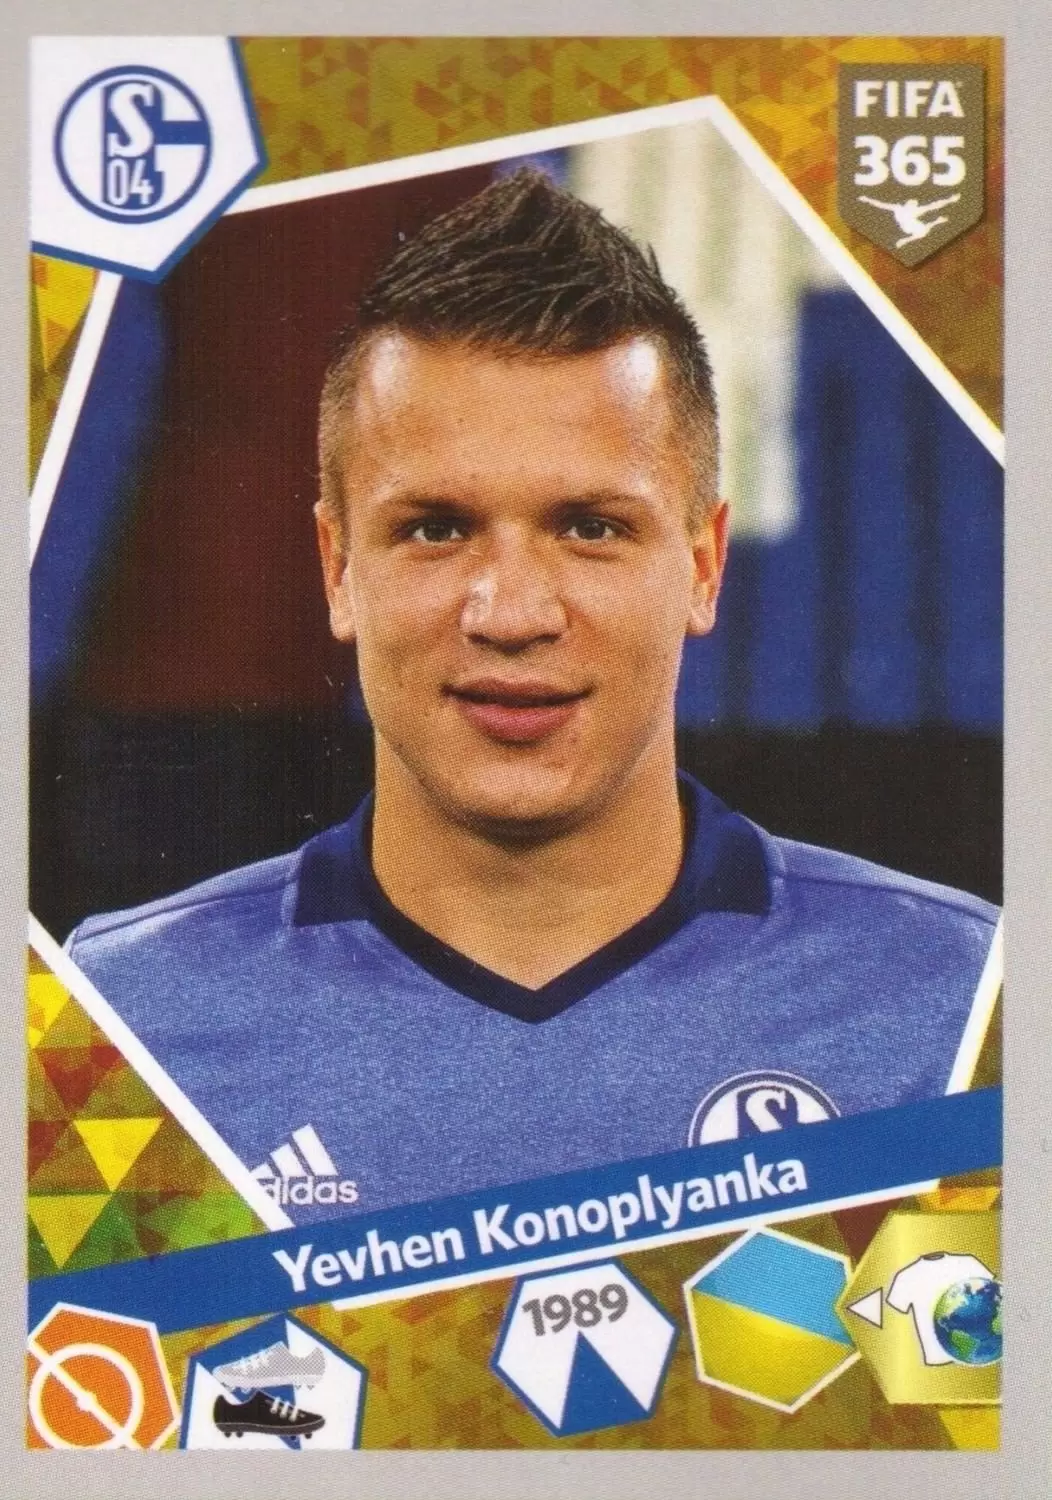 Sticker 202 a/b Yevhen Konoplyanka FC Schalke 04 Panini FIFA365 2019 